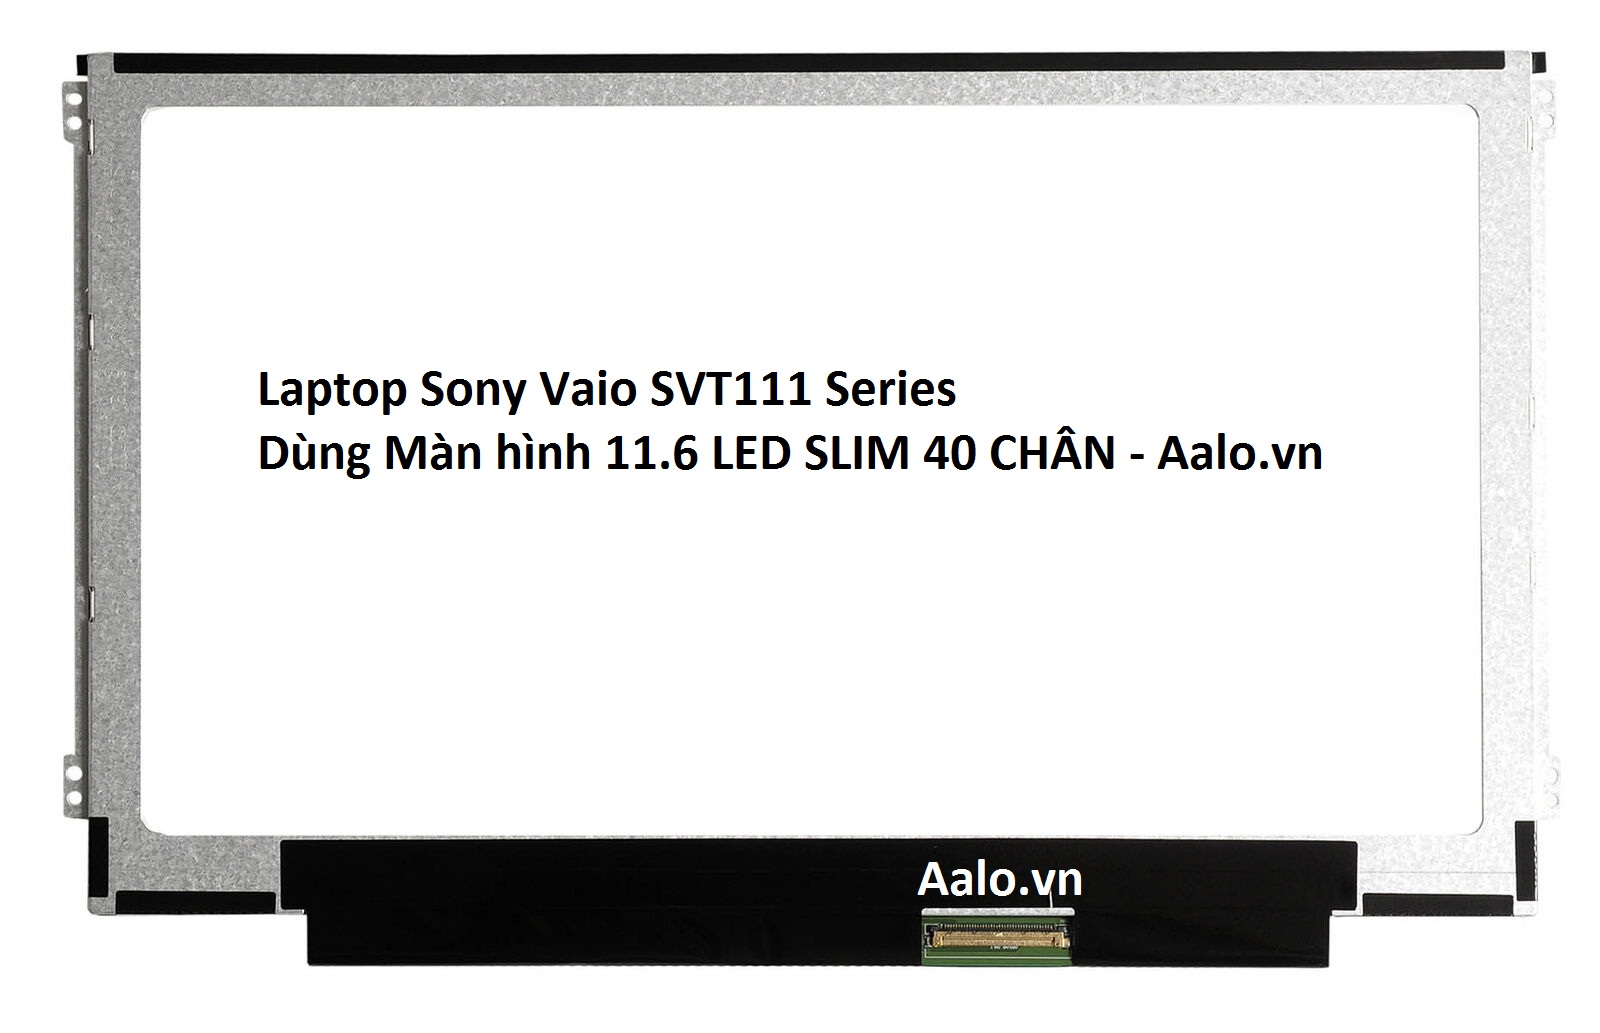 Màn hình Laptop Sony Vaio SVT111 Series - Aalo.vn